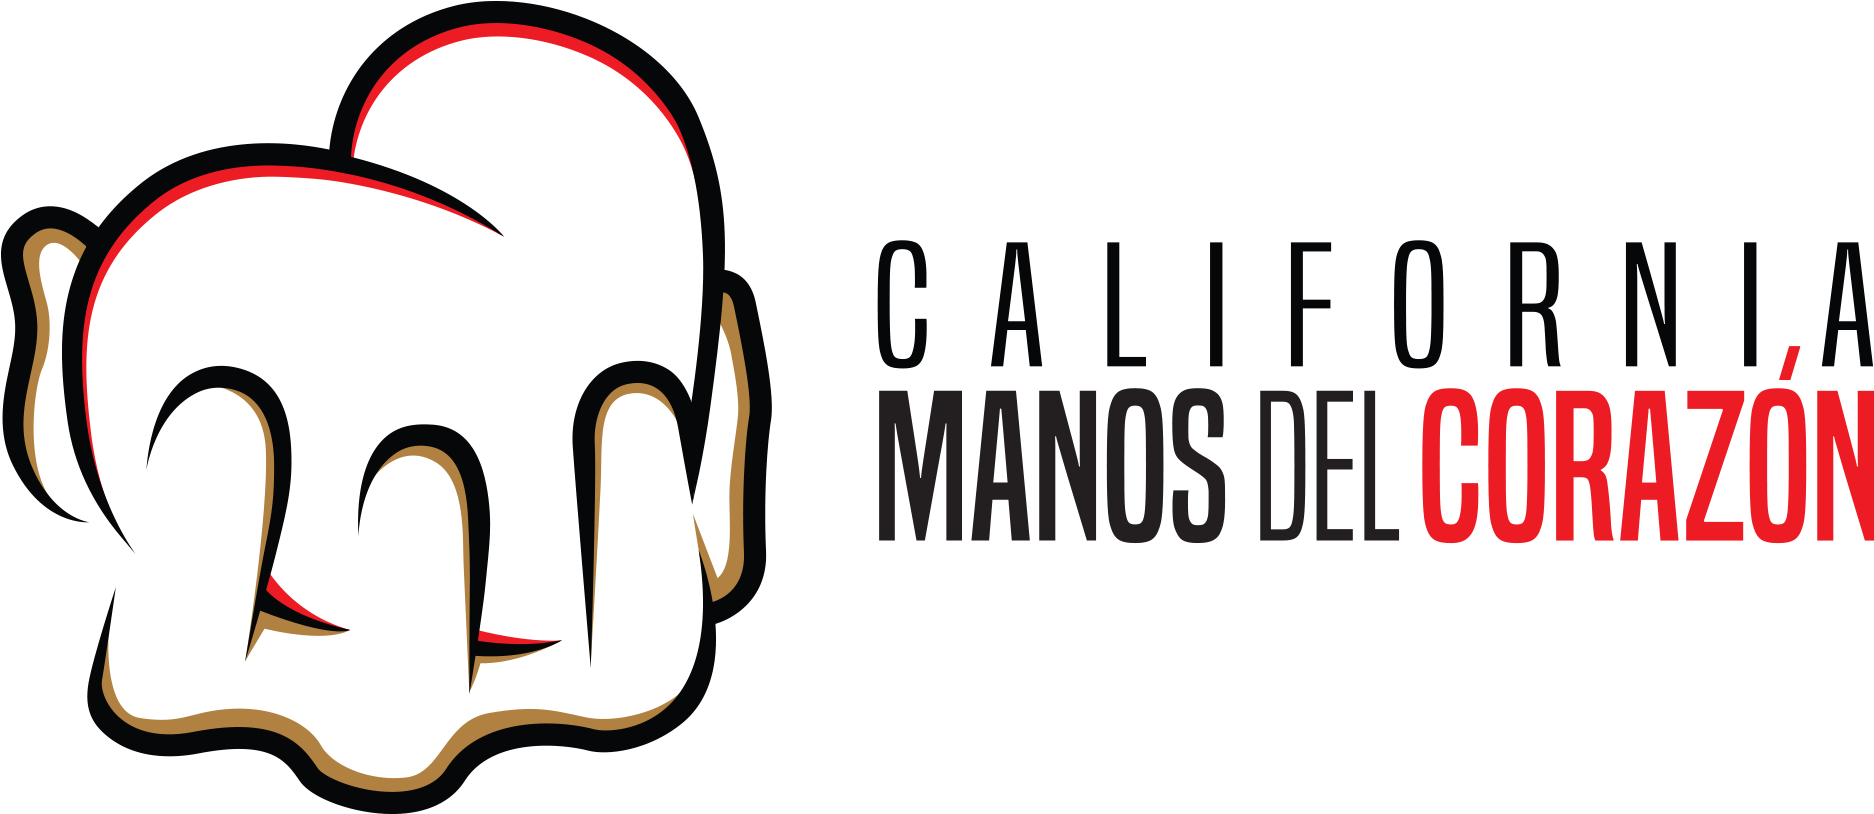 2979d4 - Logos De Manos Con Un Corazon Clipart (1957x893), Png Download